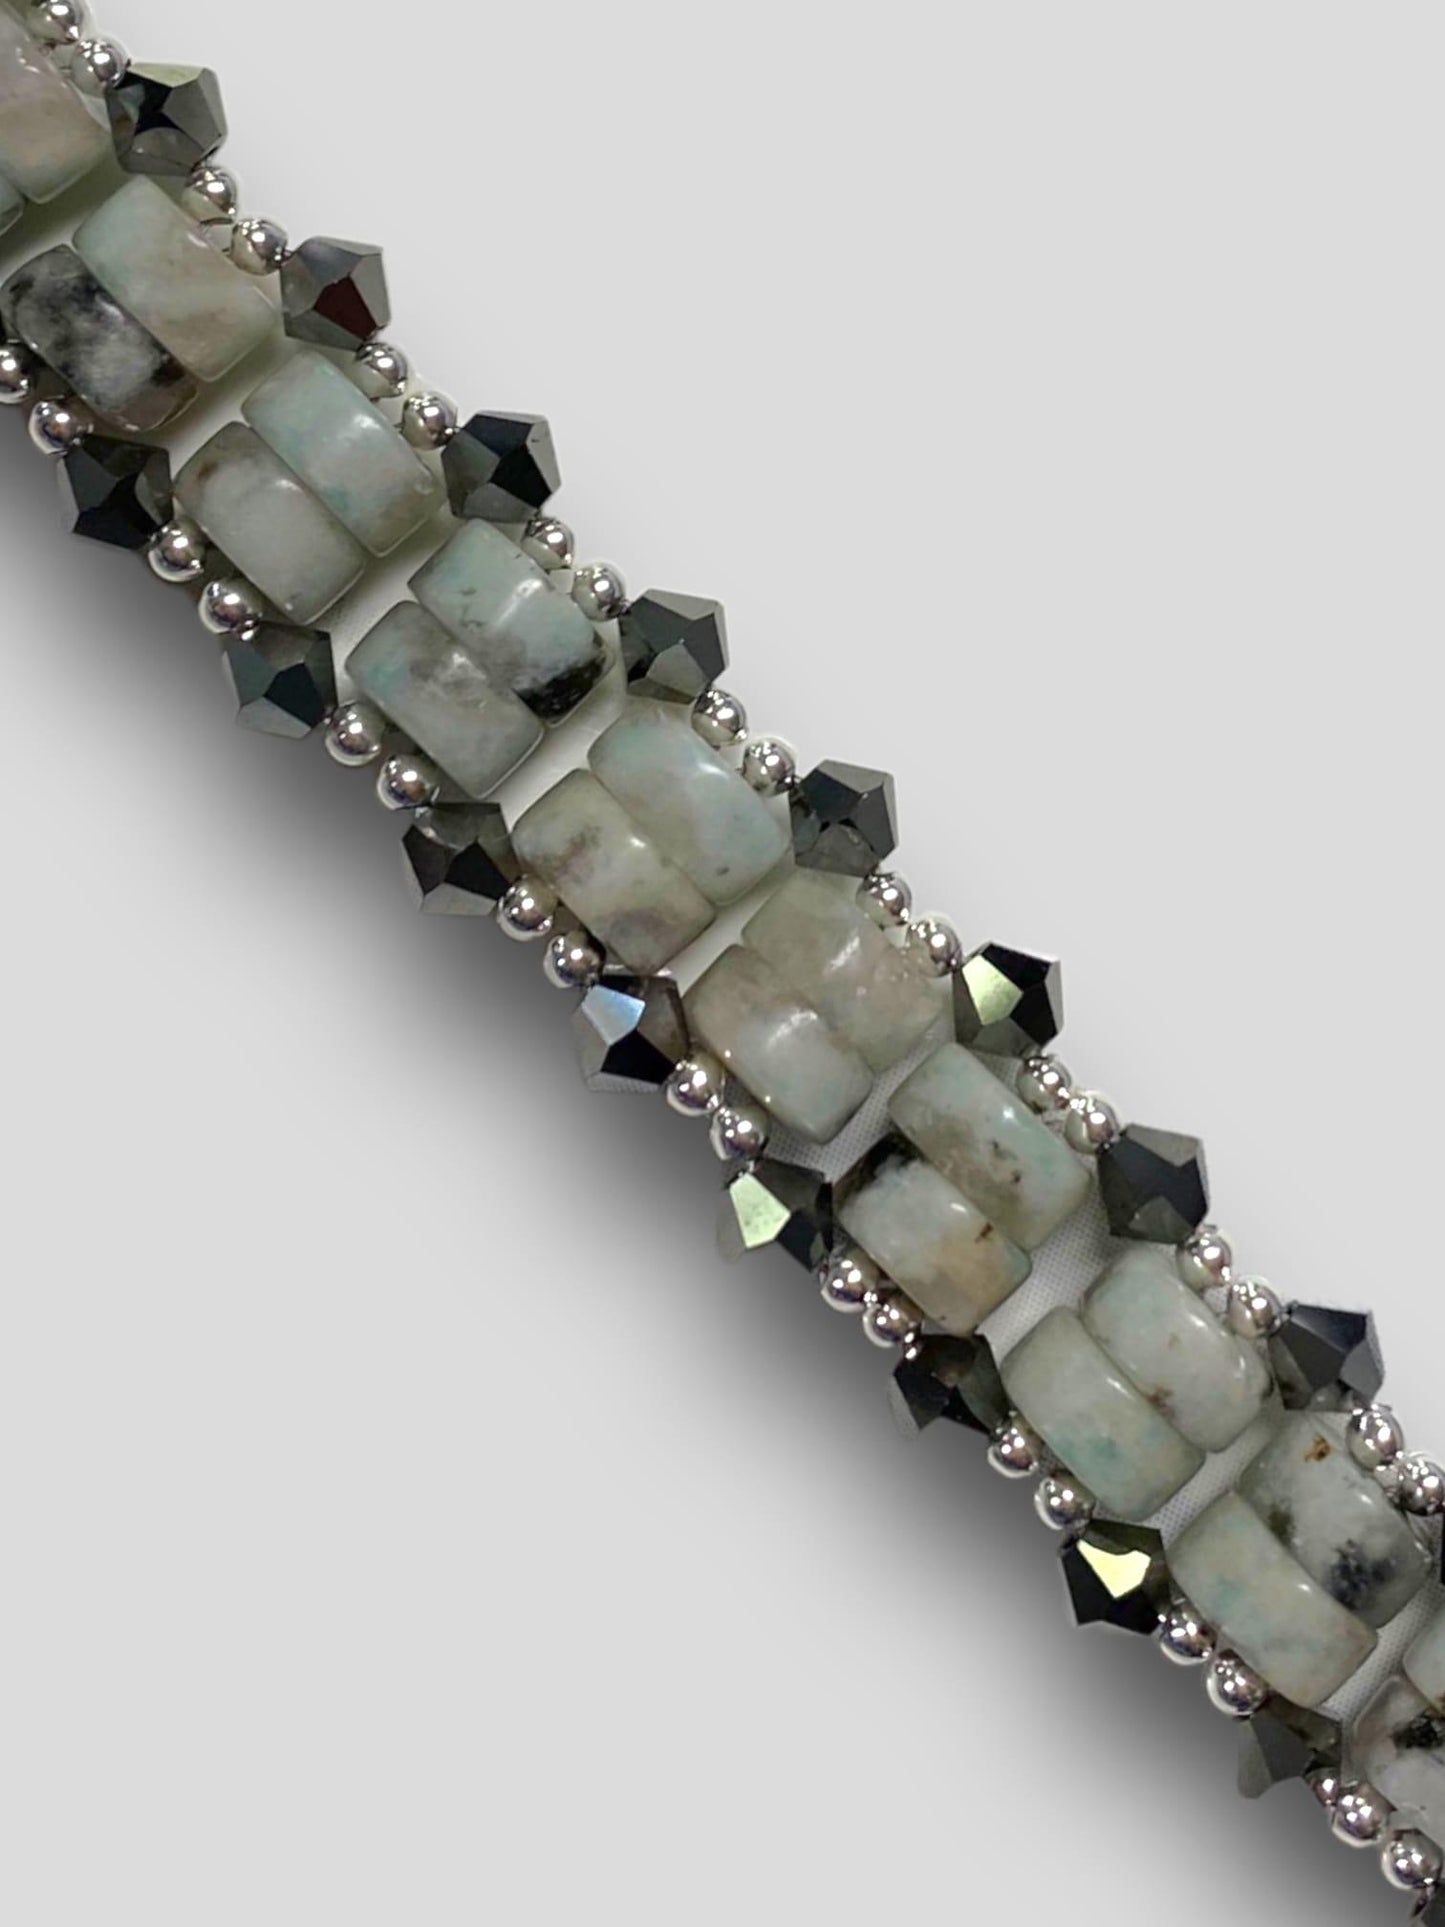 Sparkling Gemstone Weave Bracelet - Jewelry Making Kit - Too Cute Beads